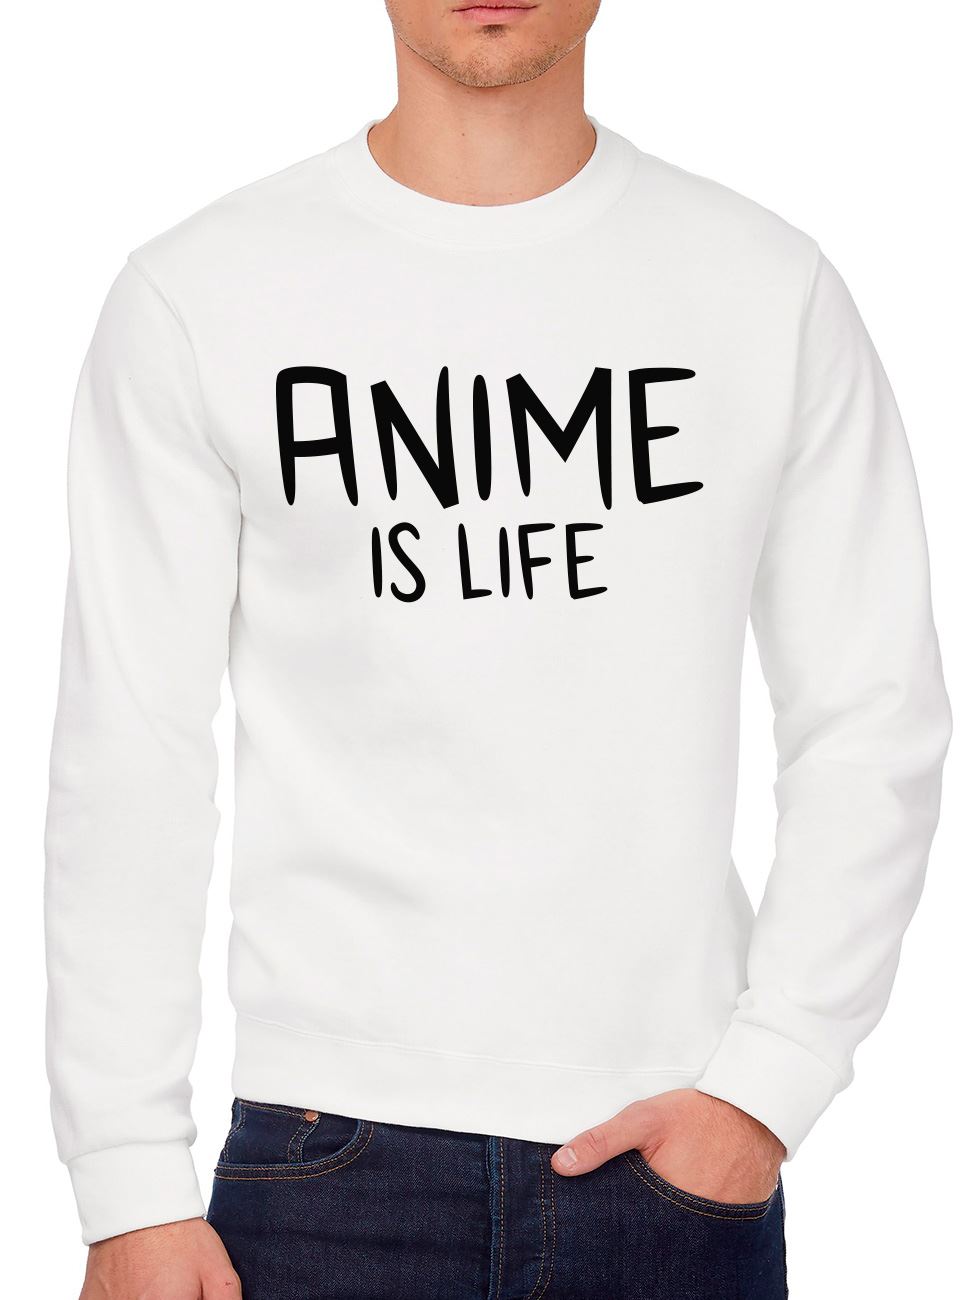 Anime is Life - Youth & Mens Sweatshirt